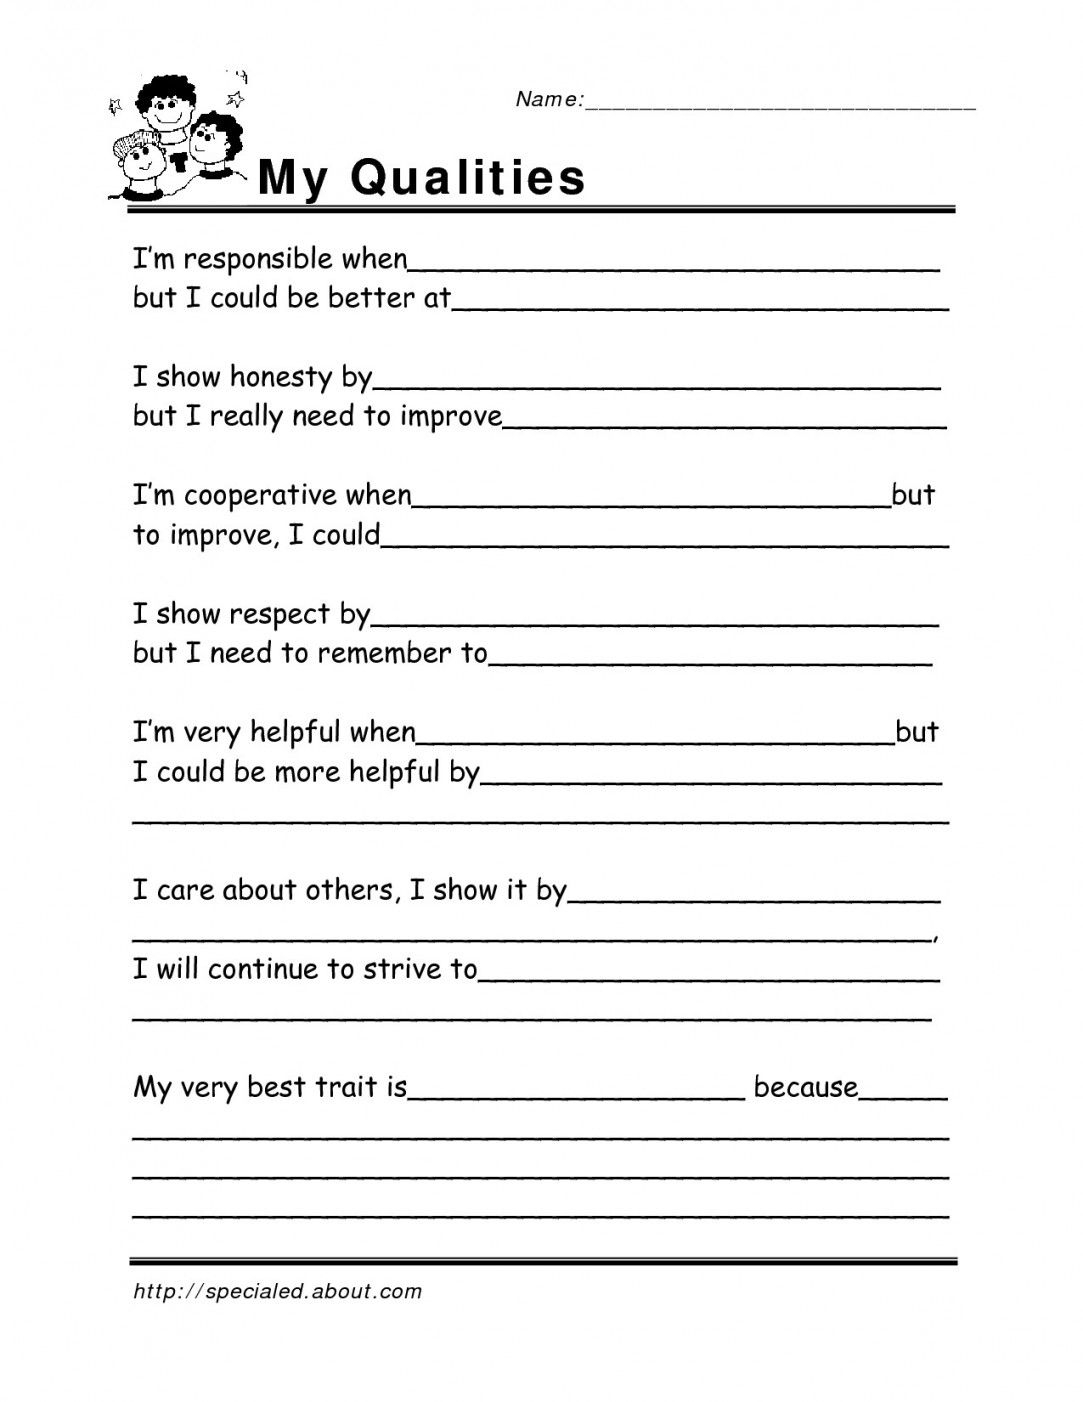 Free Printable Coping Skills Worksheets | Lostranquillos - Free Printable Coping Skills Worksheets For Adults